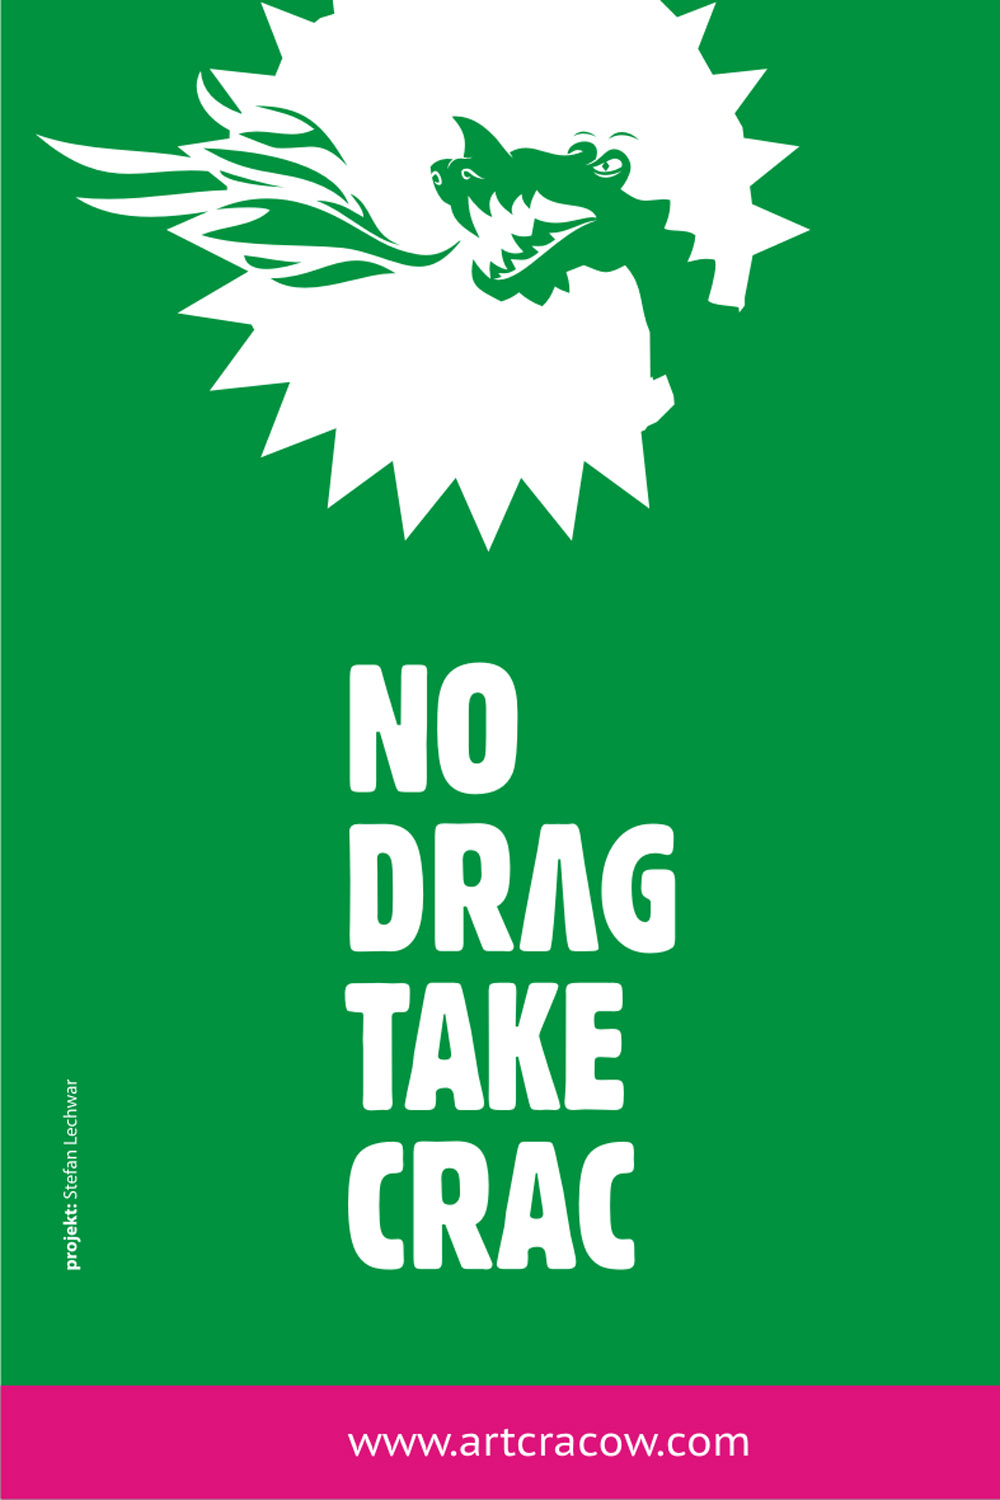 No Drug Take Crac 07